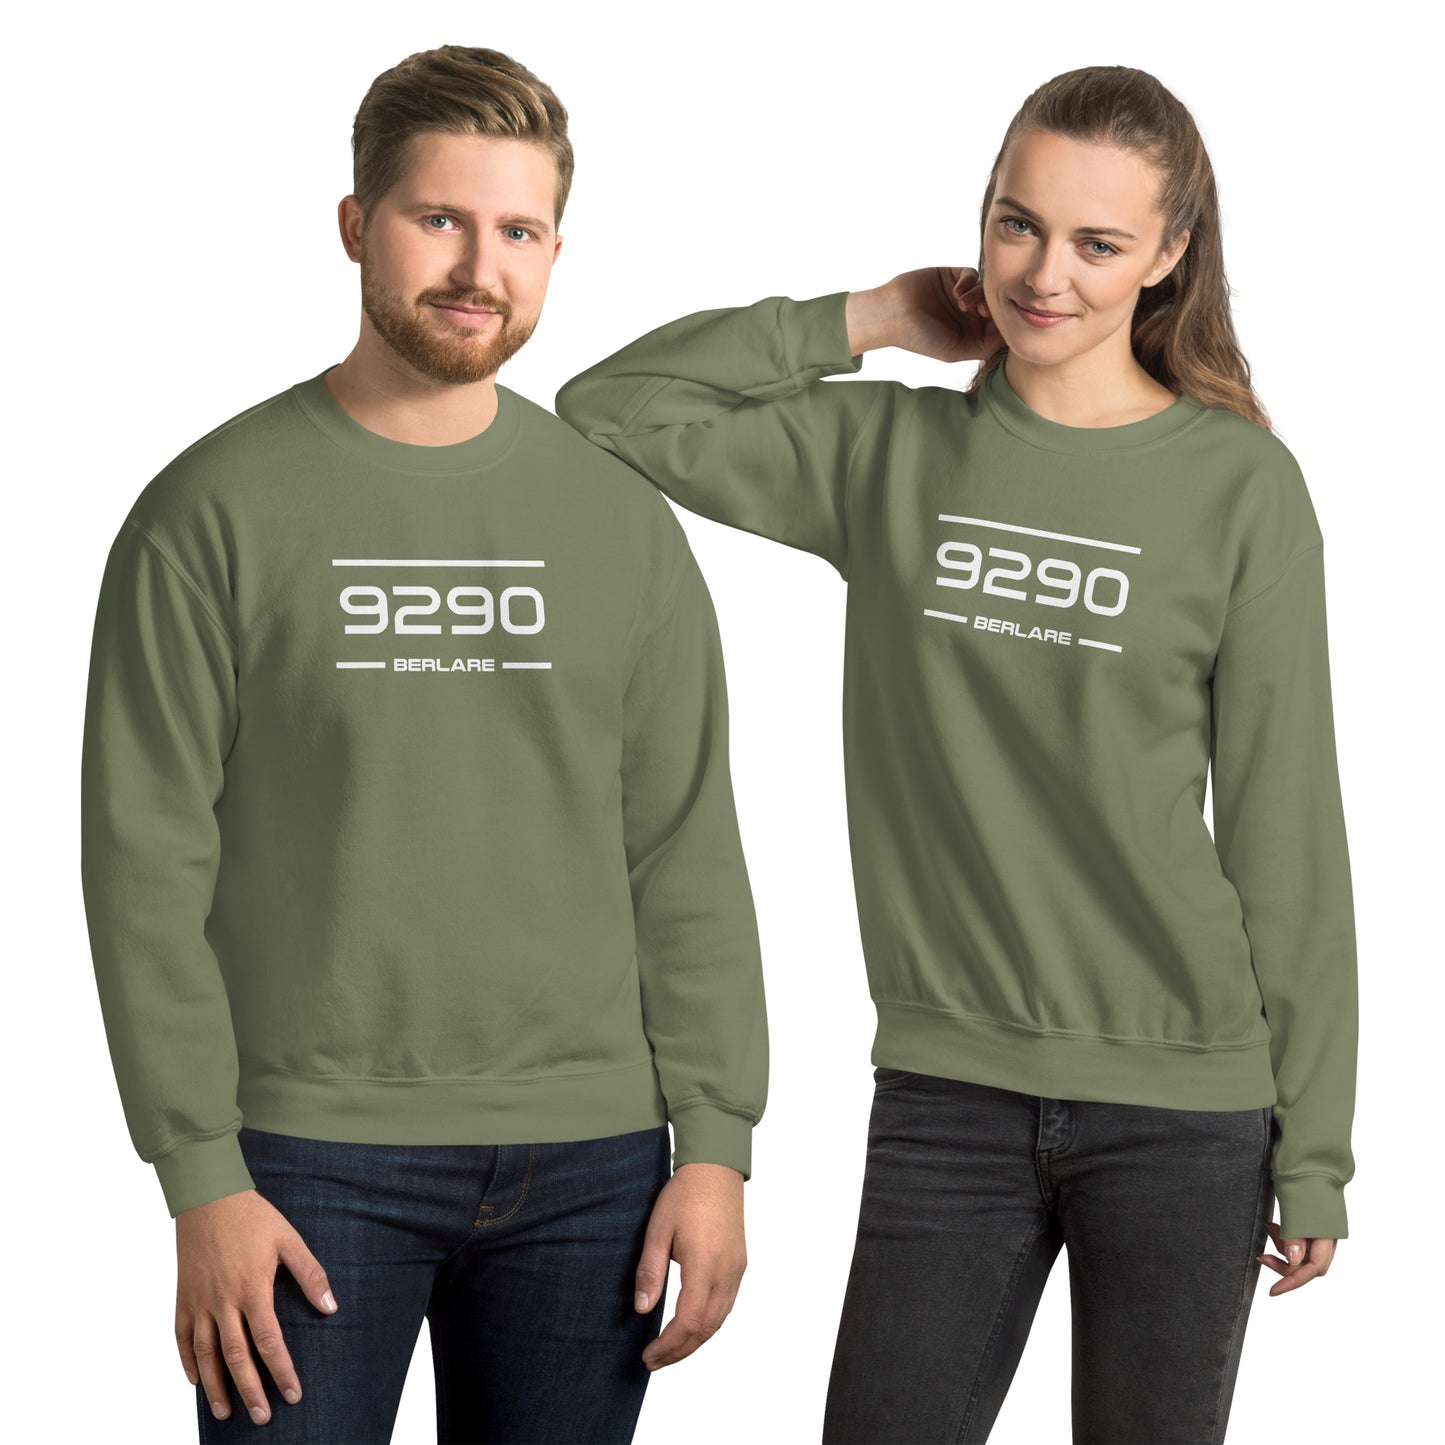 Sweater - 9290 - Berlare (M/V)